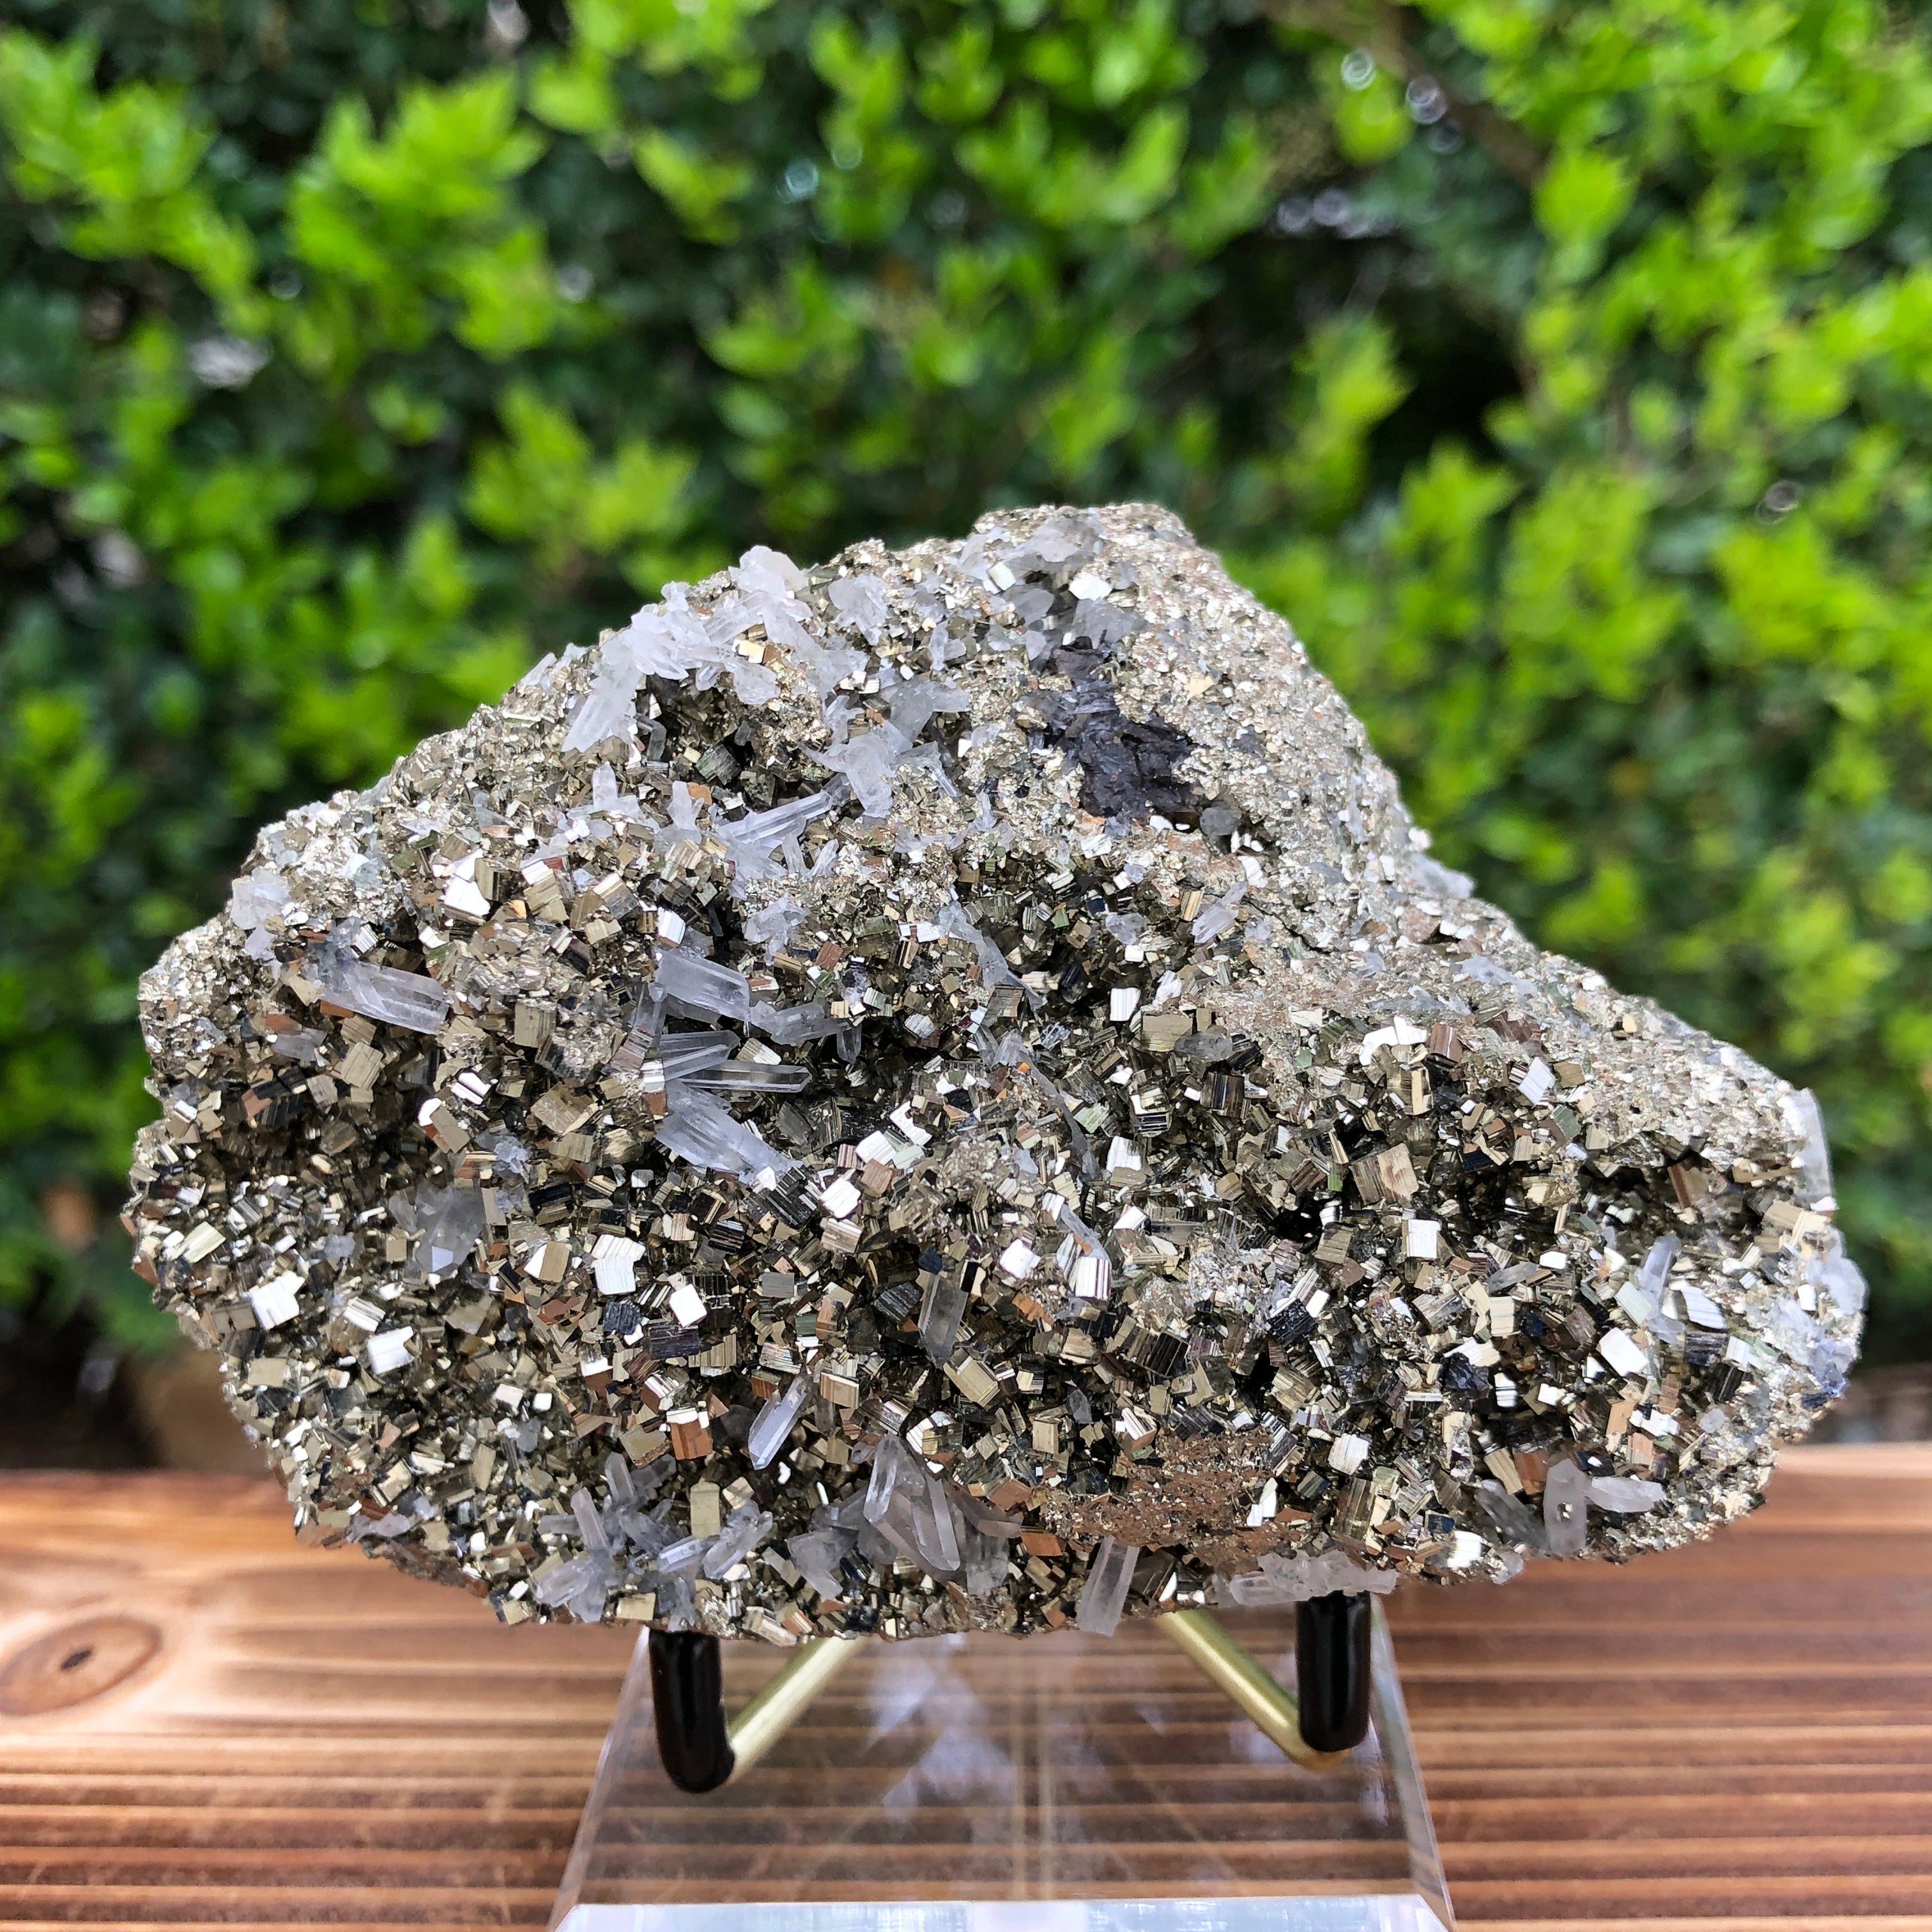 592g 11x7x5cm Gold  Clear Quartz Pyrite with Grey Galena from Huaron, Peru